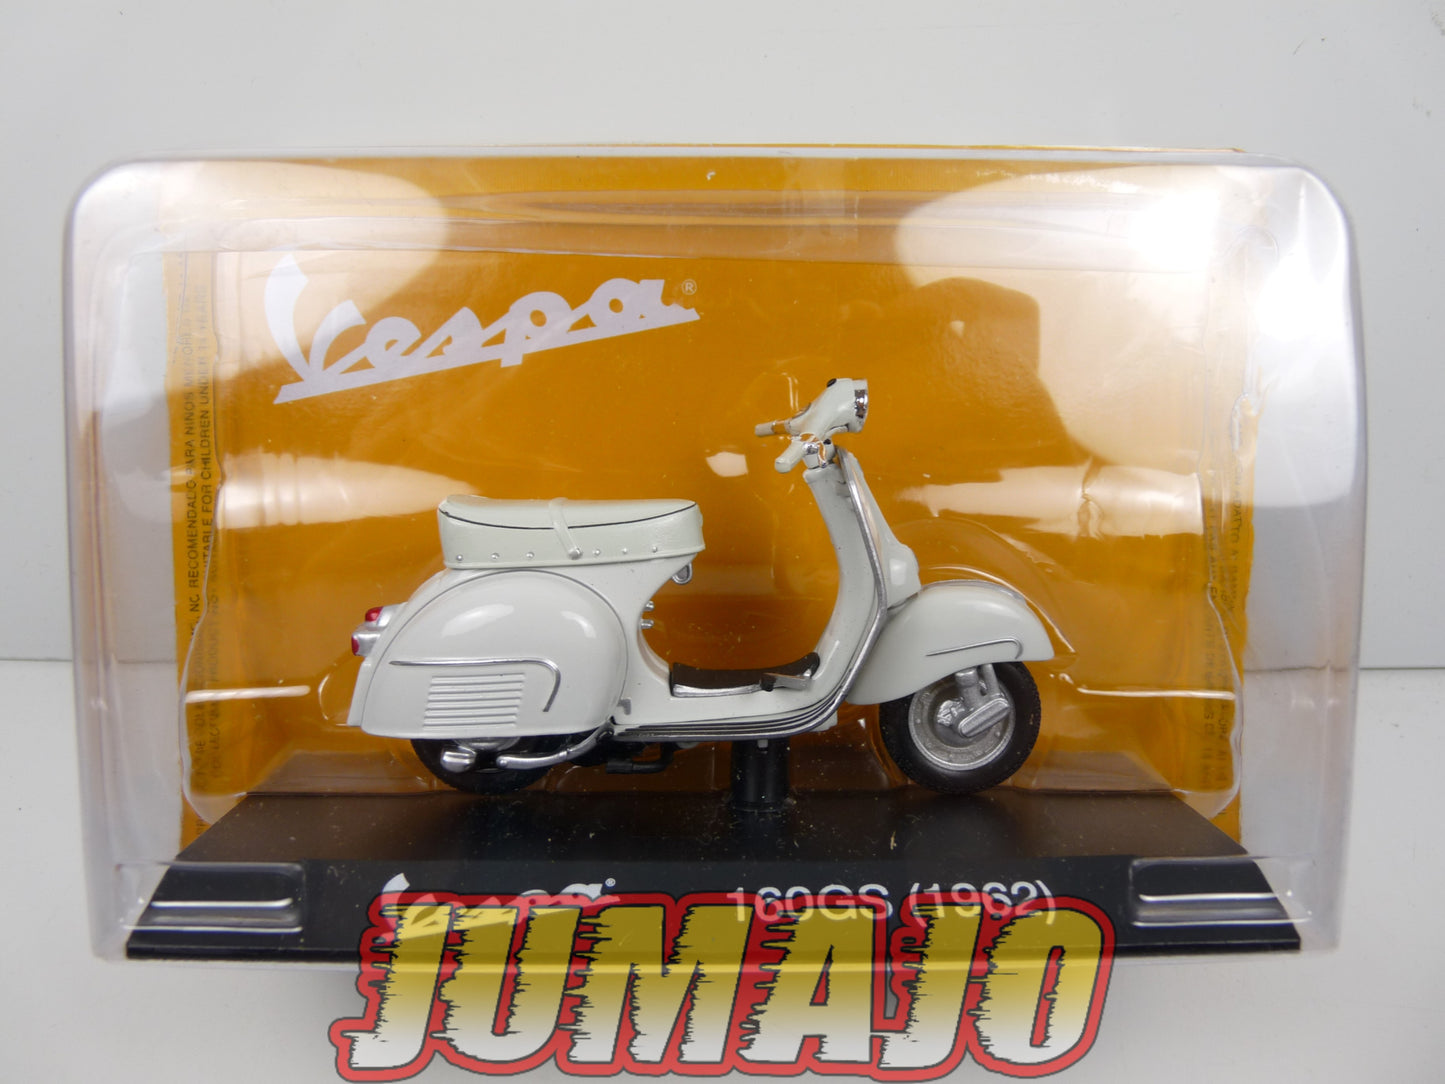 VES26 MOTO VESPA ITALIE Fassi Toys 1/18 : VESPA 160GS 1962